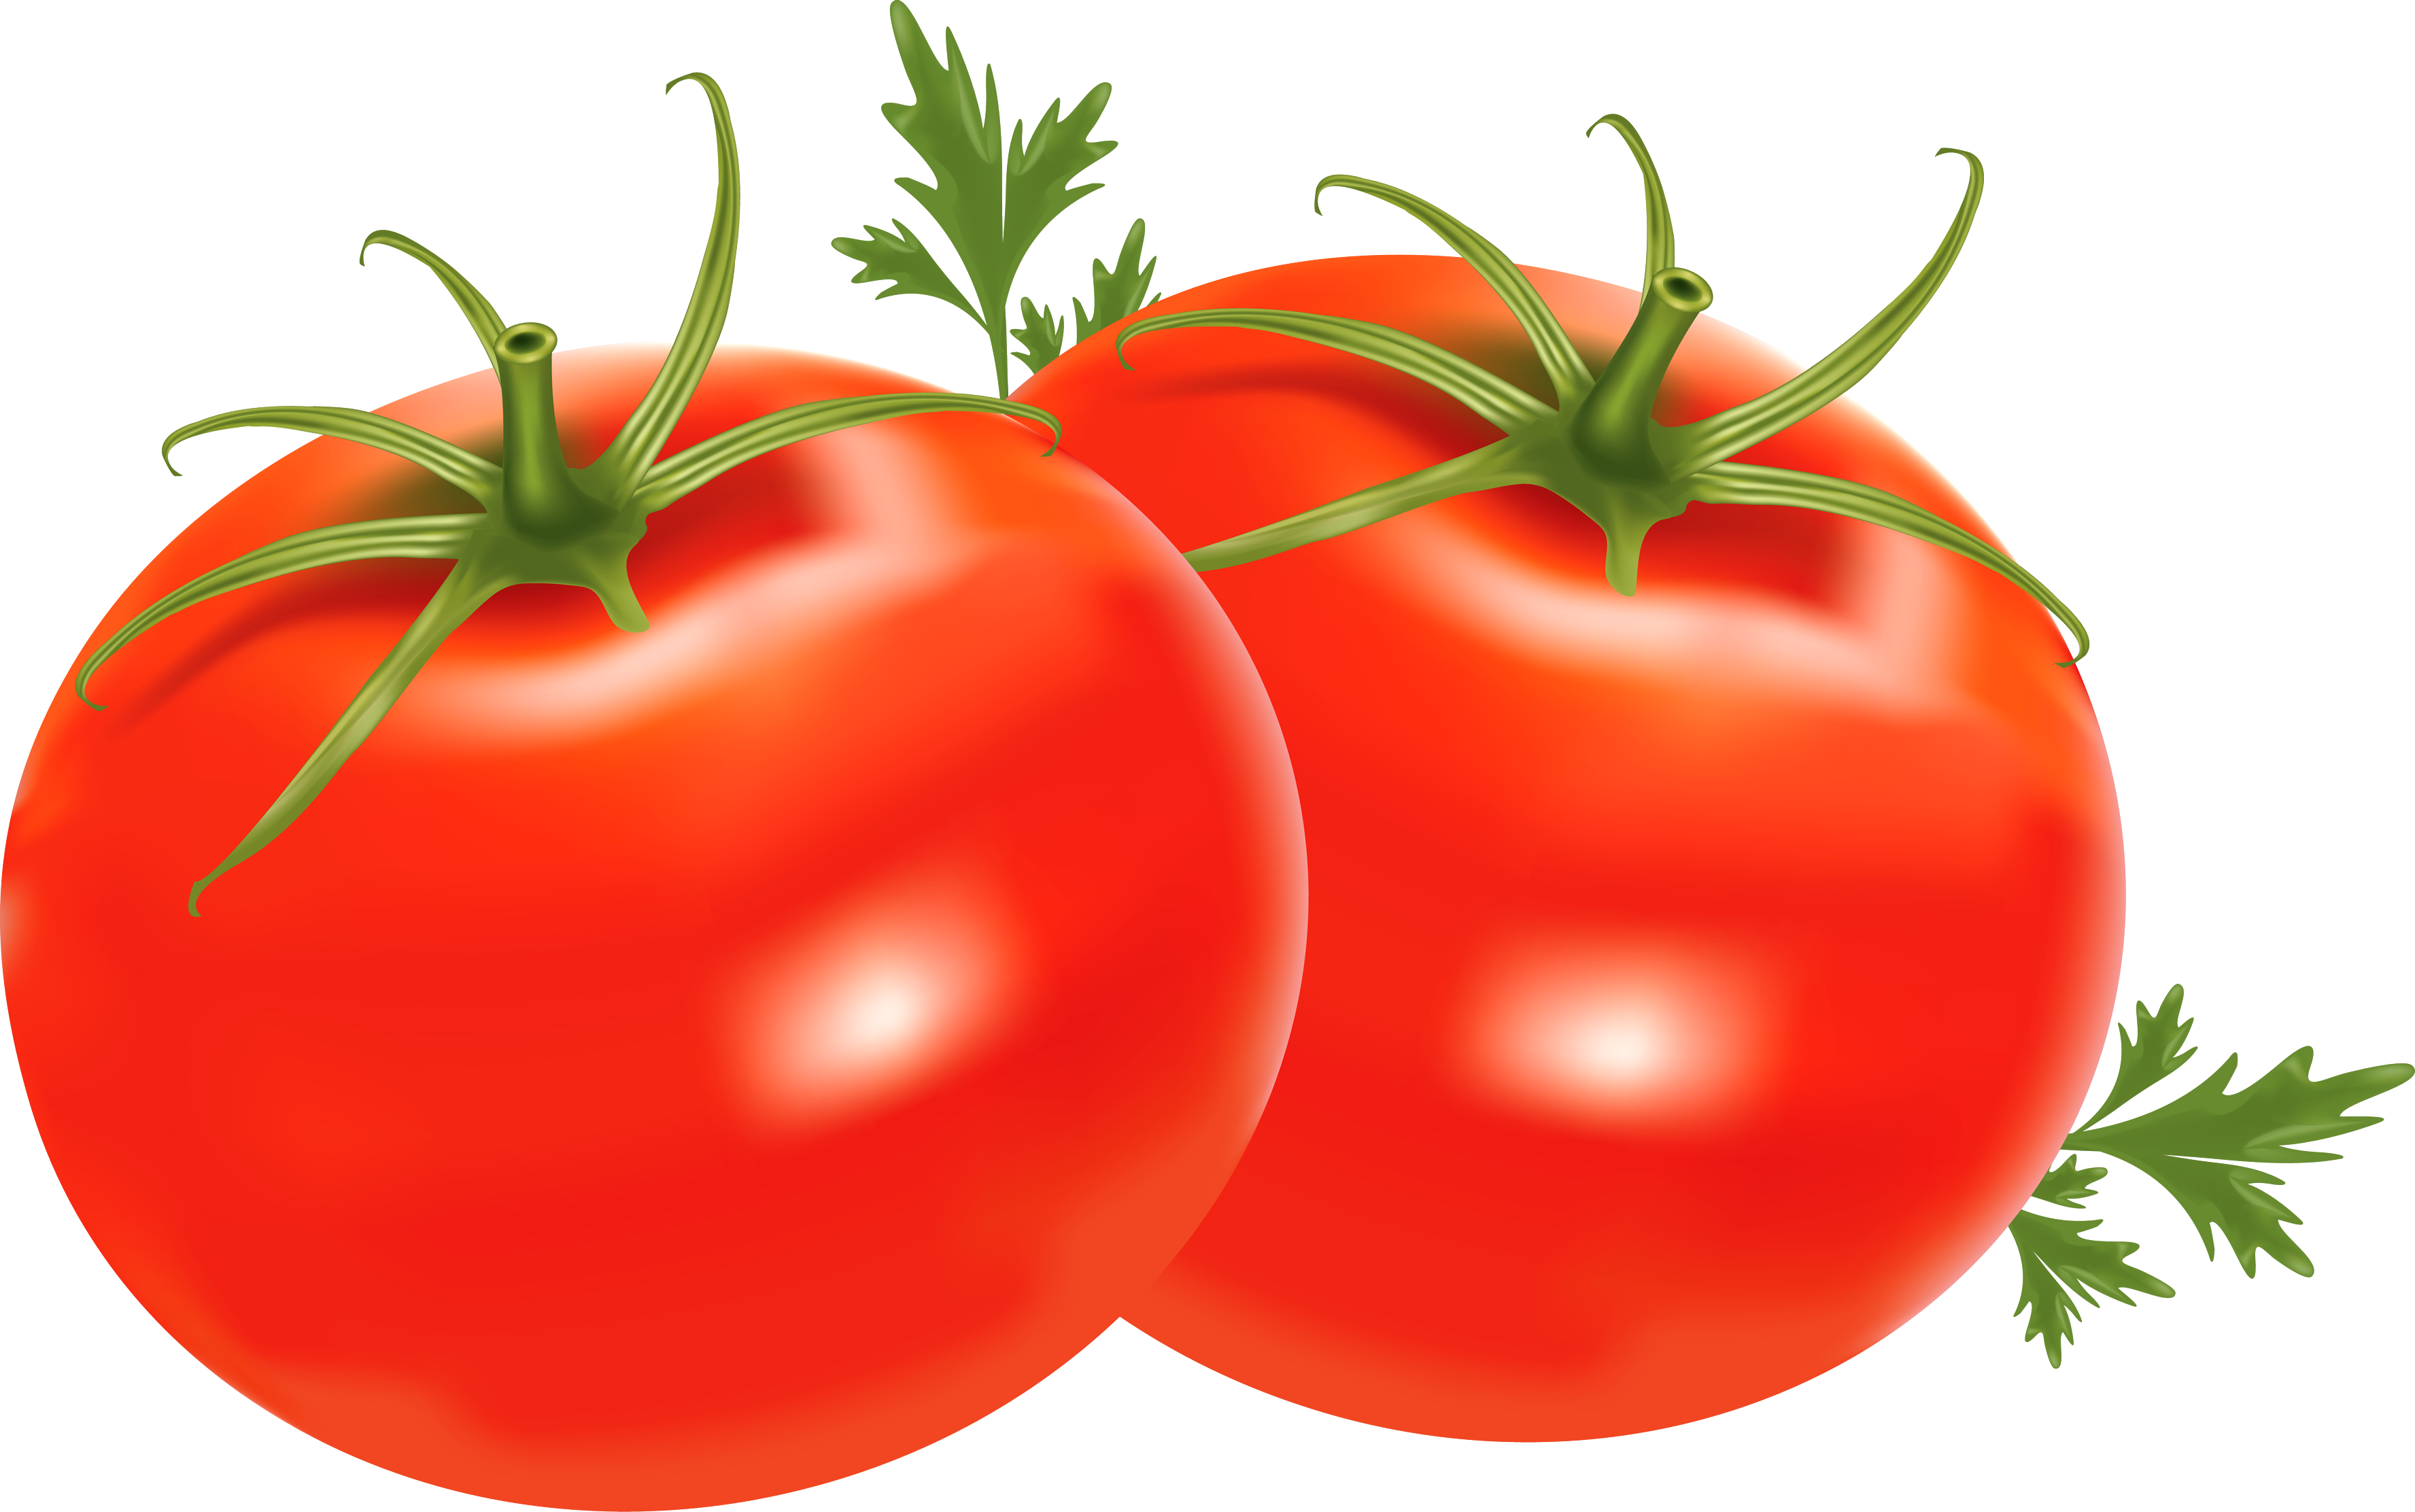 Tomato no backround clipground. Tomatoes clipart logo